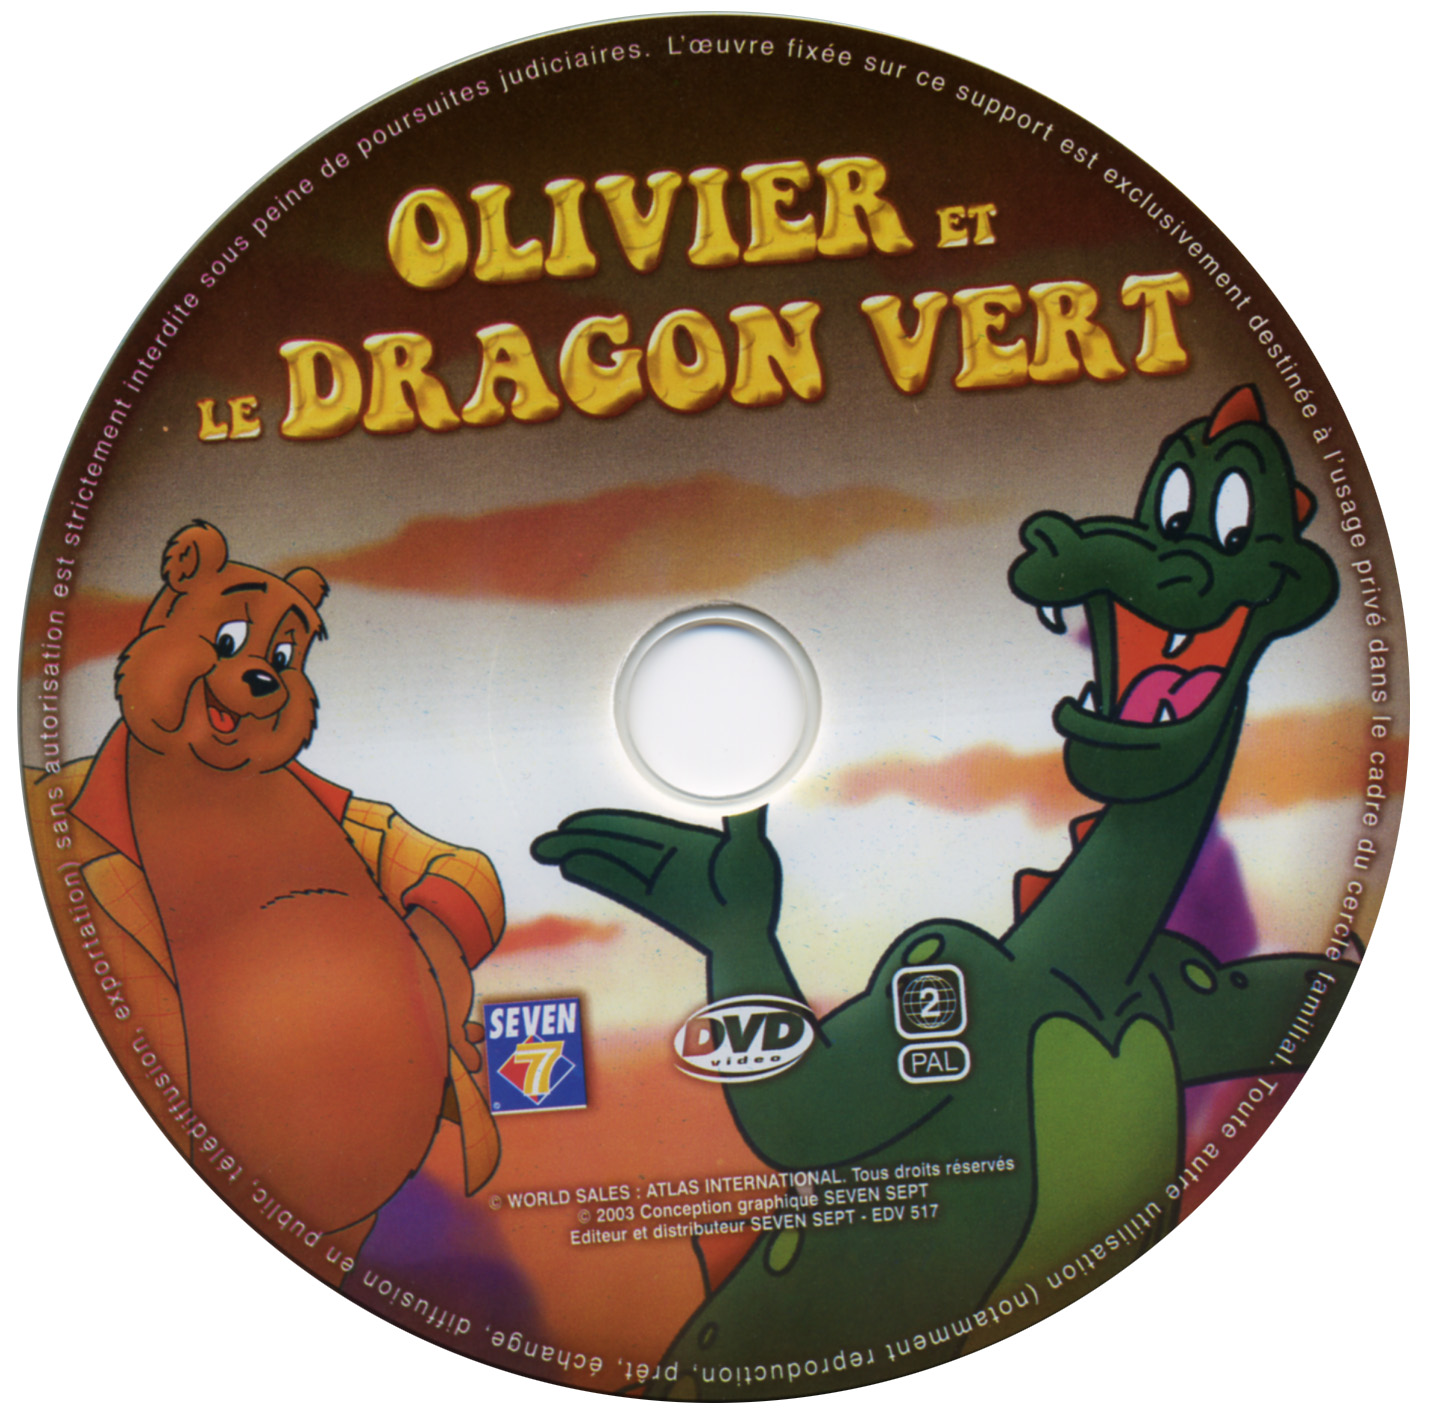 Olivier et le dragon vert